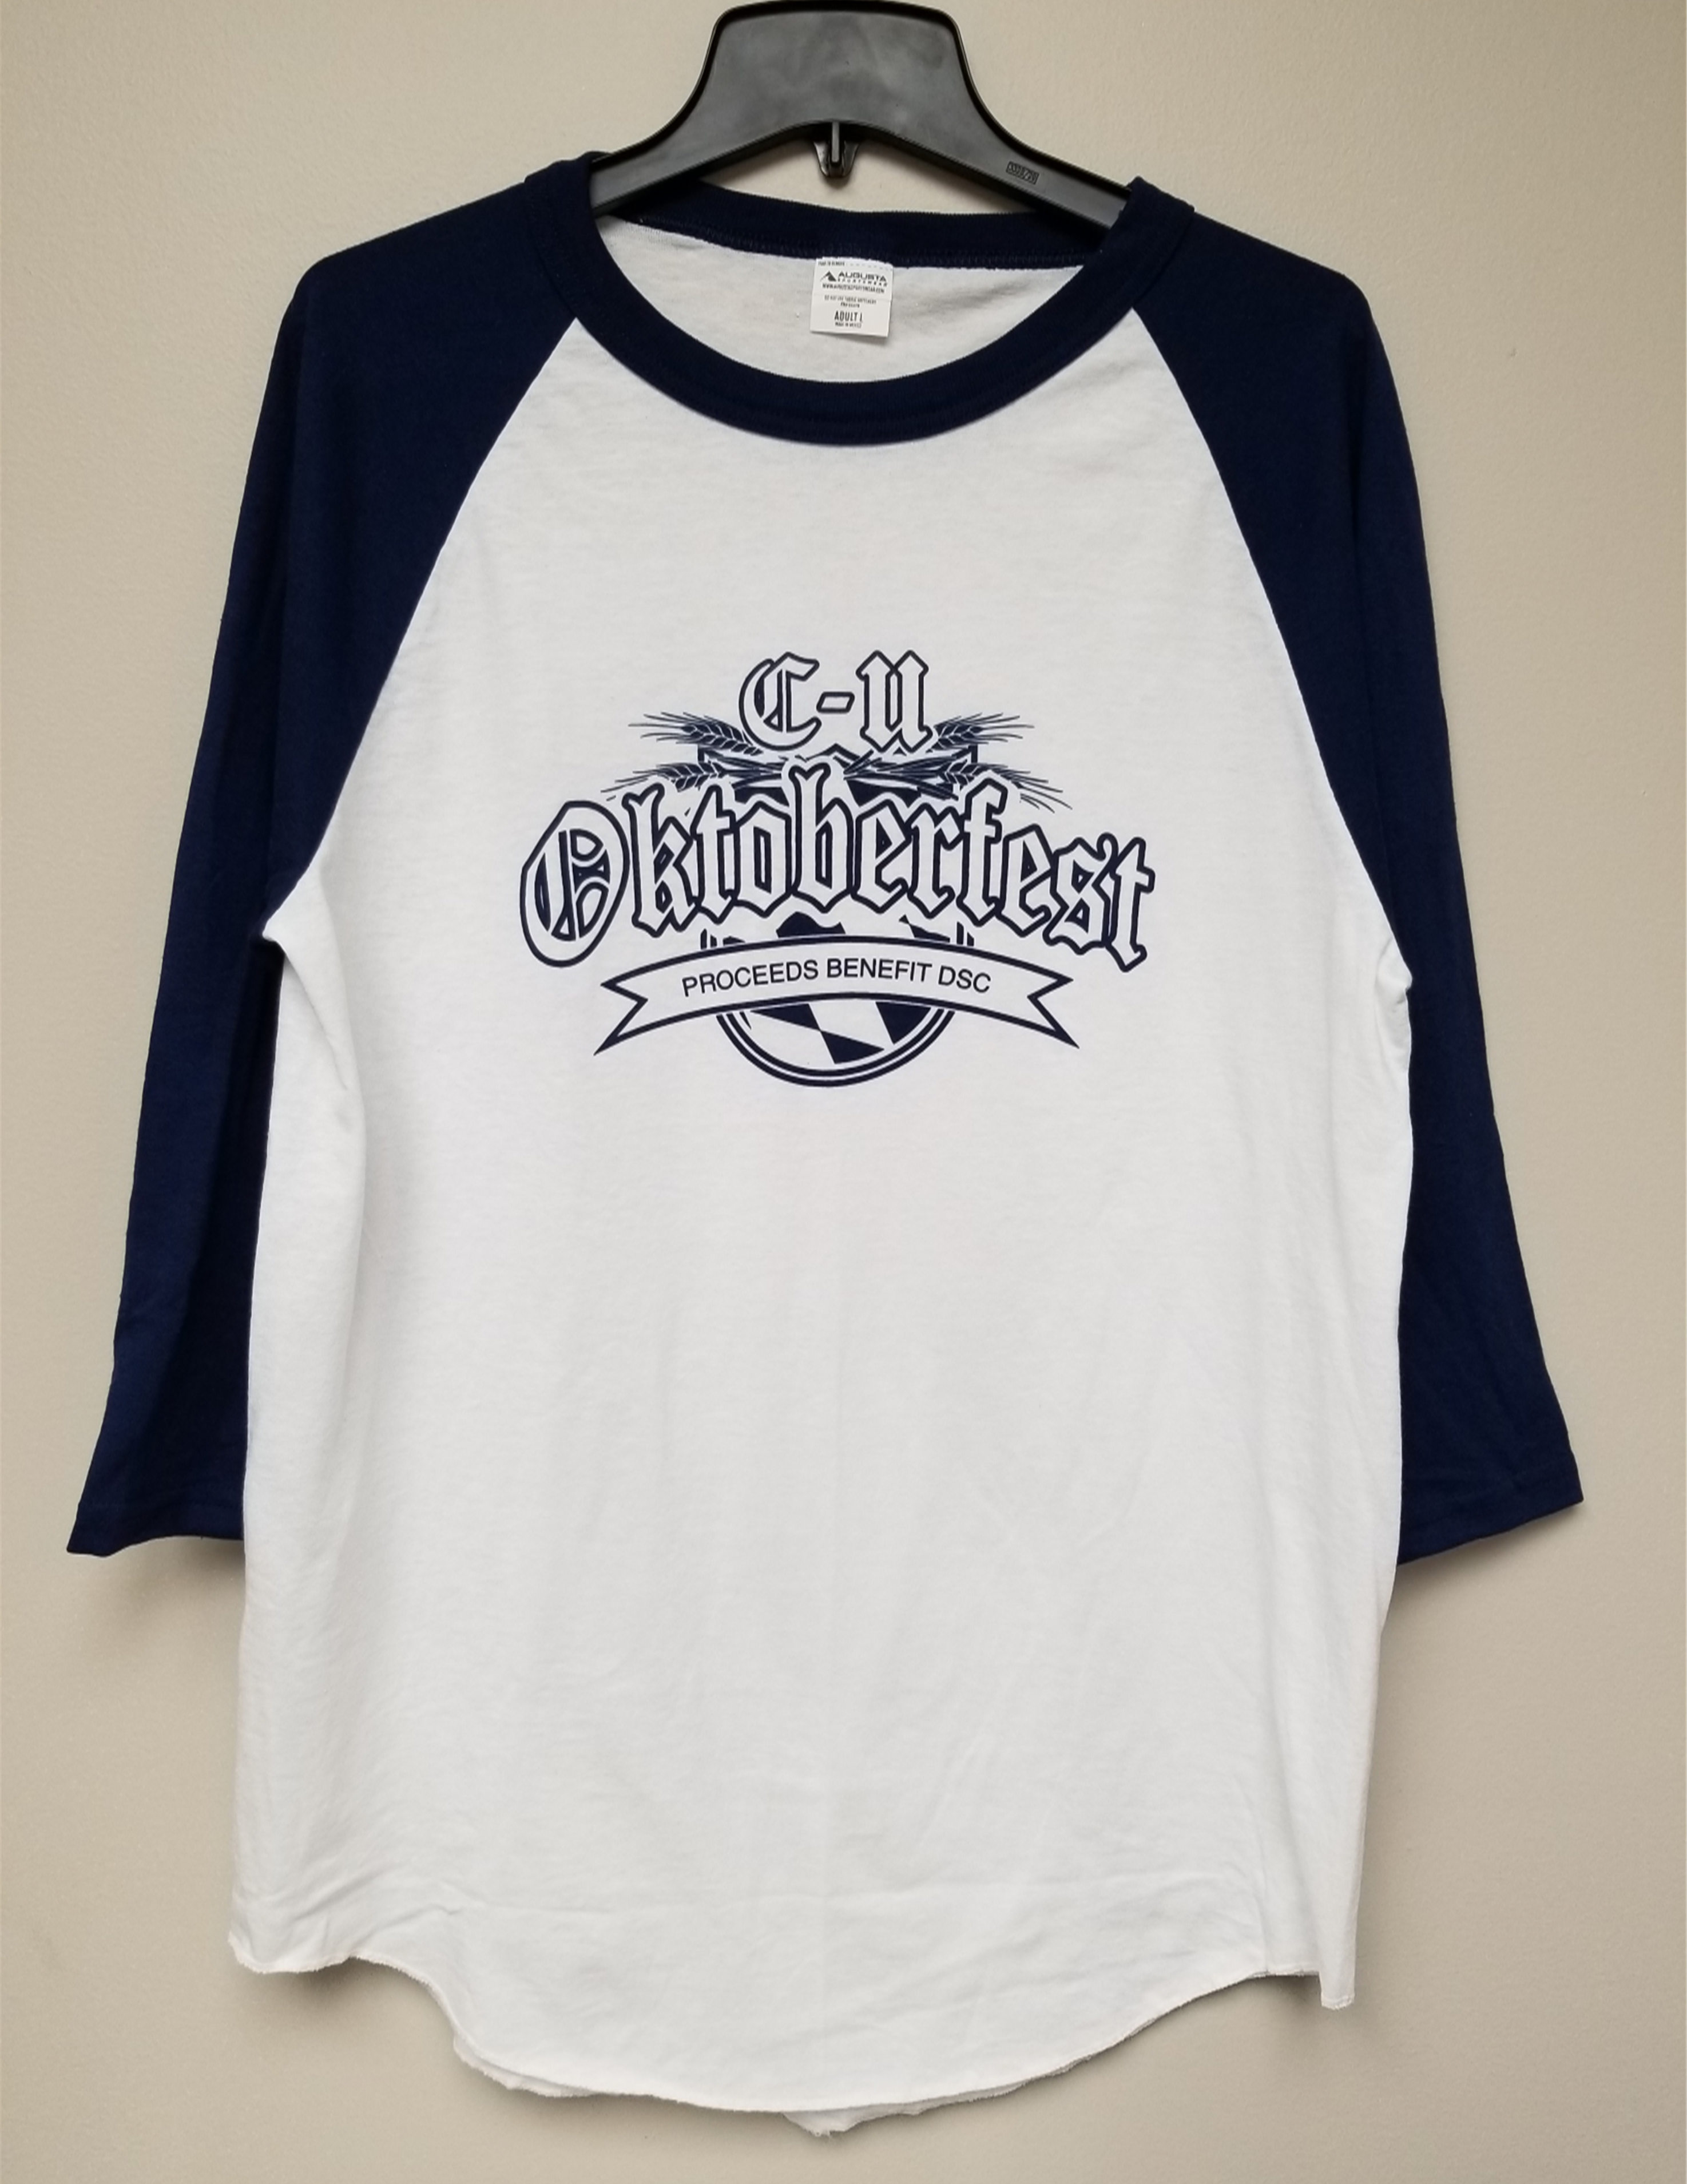 Baseball T Shirt - $20